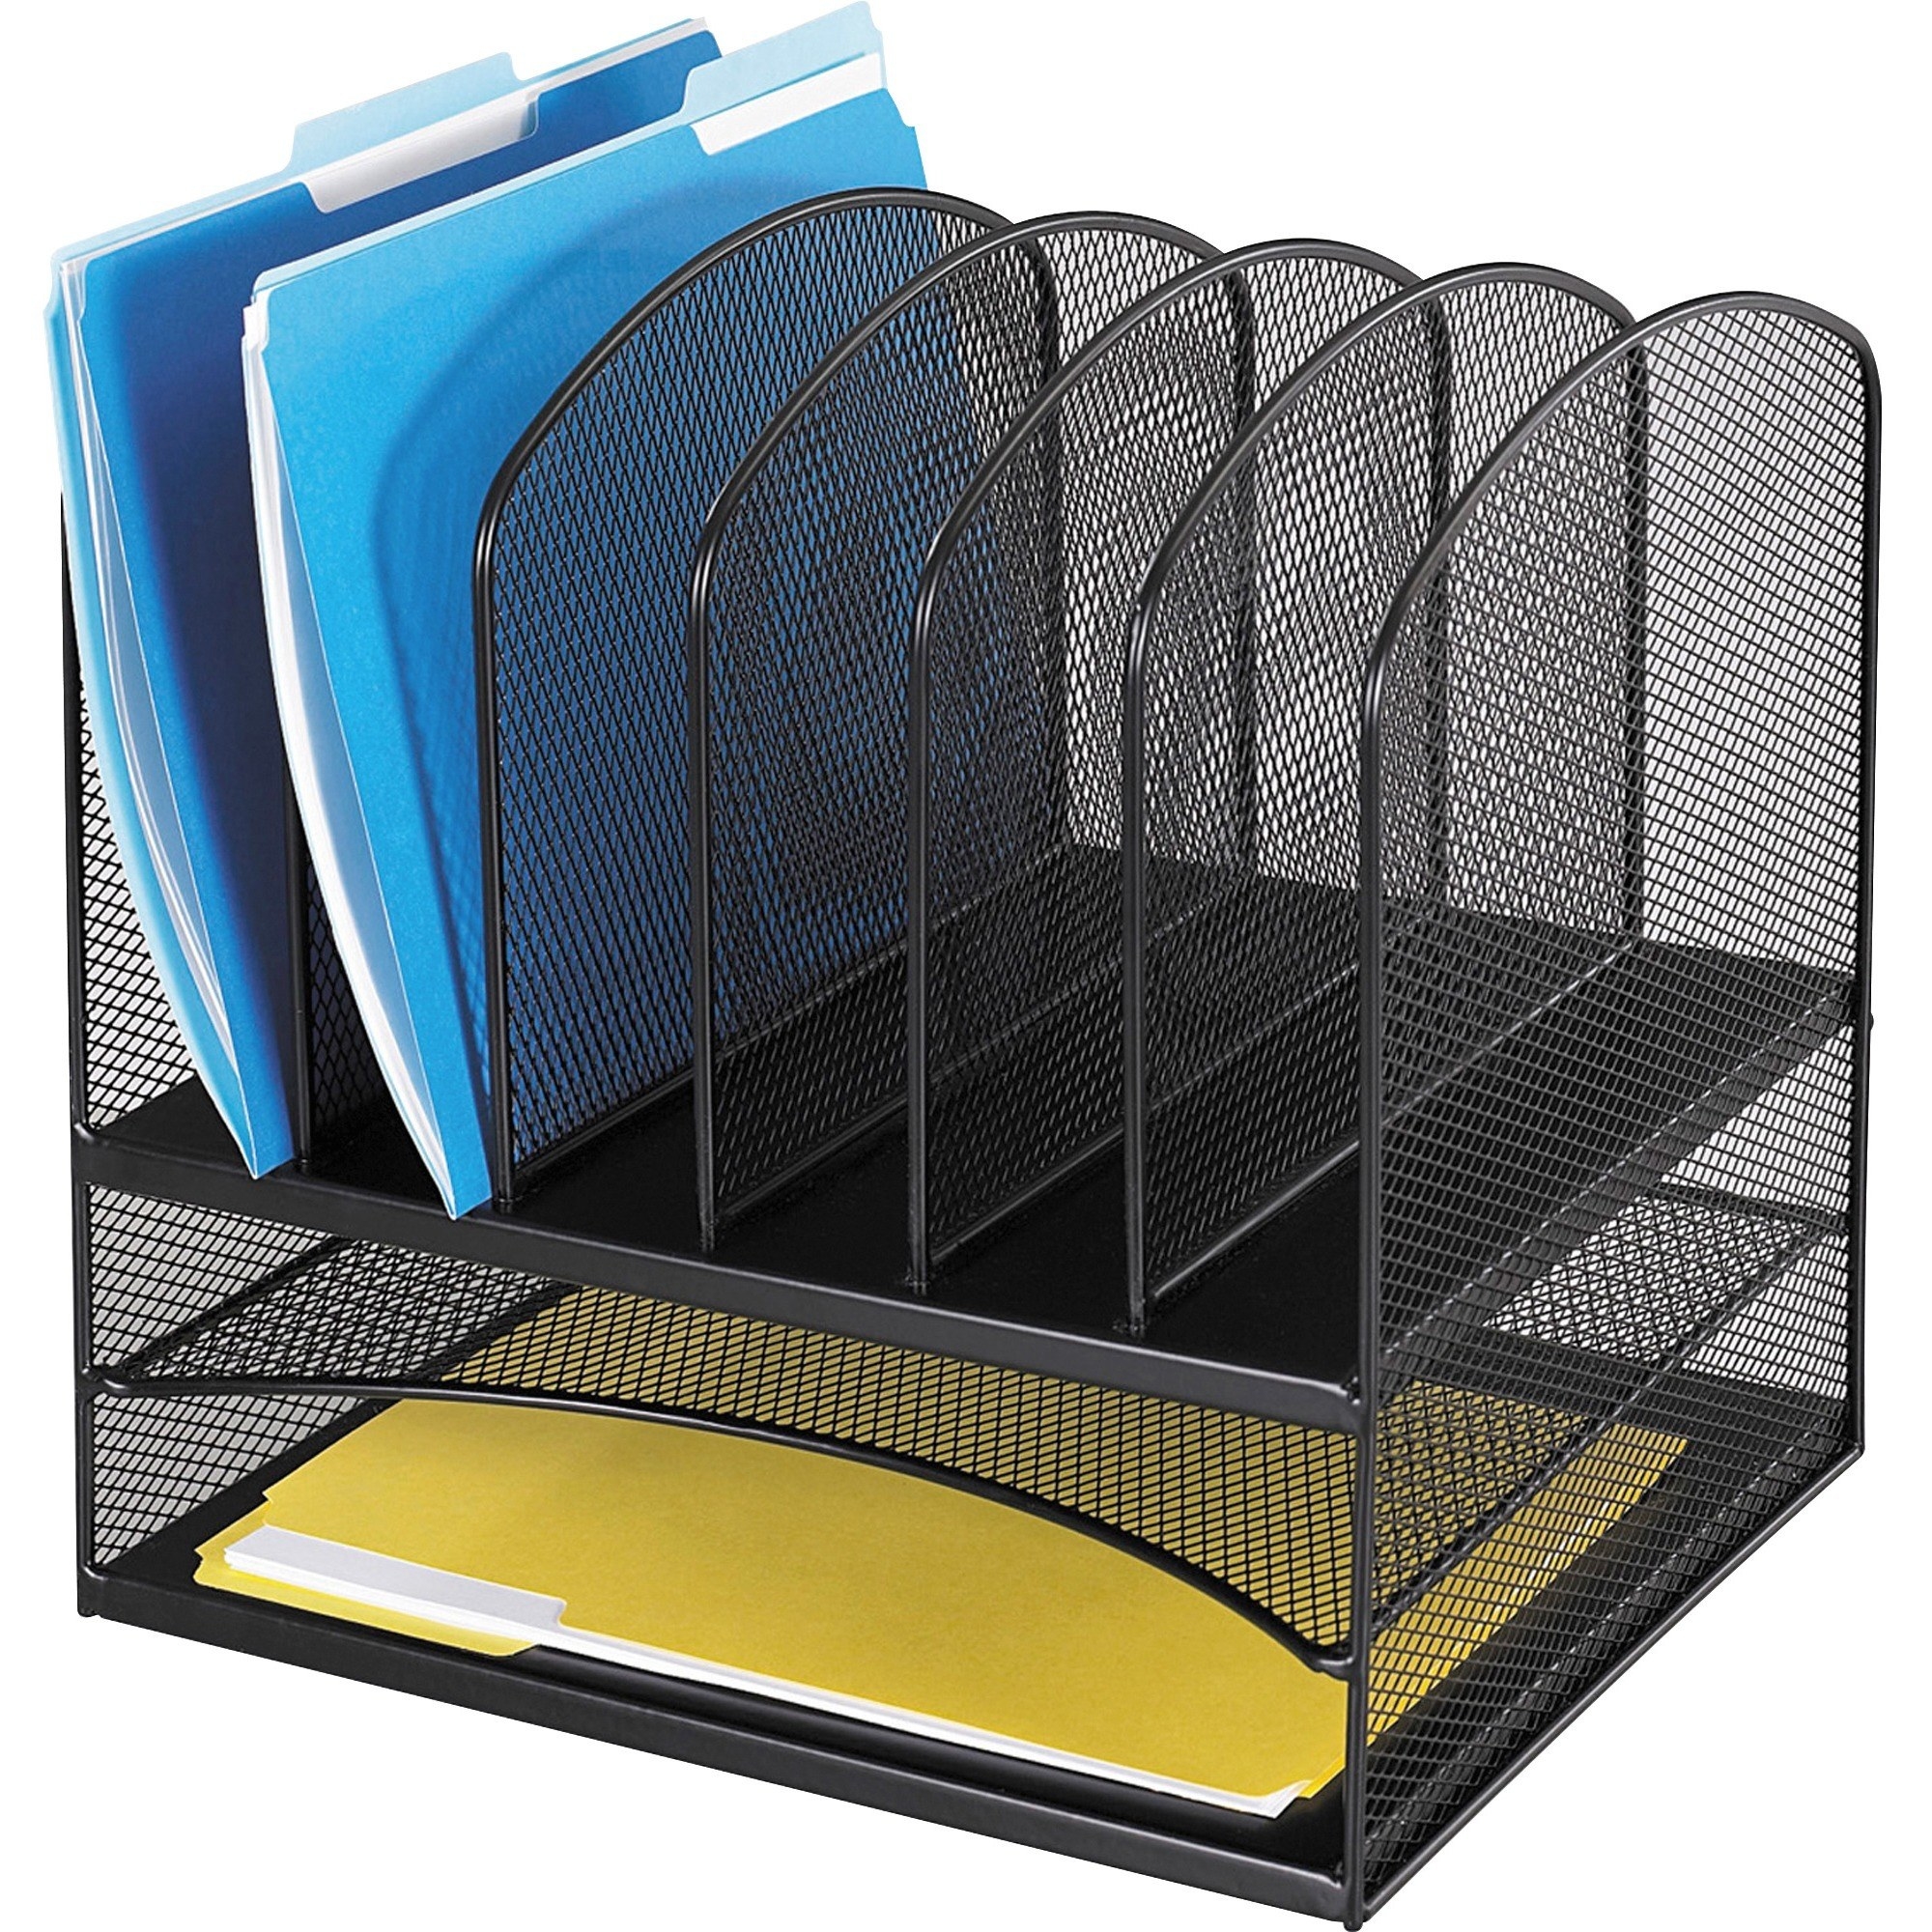 The black mesh file folder organizer